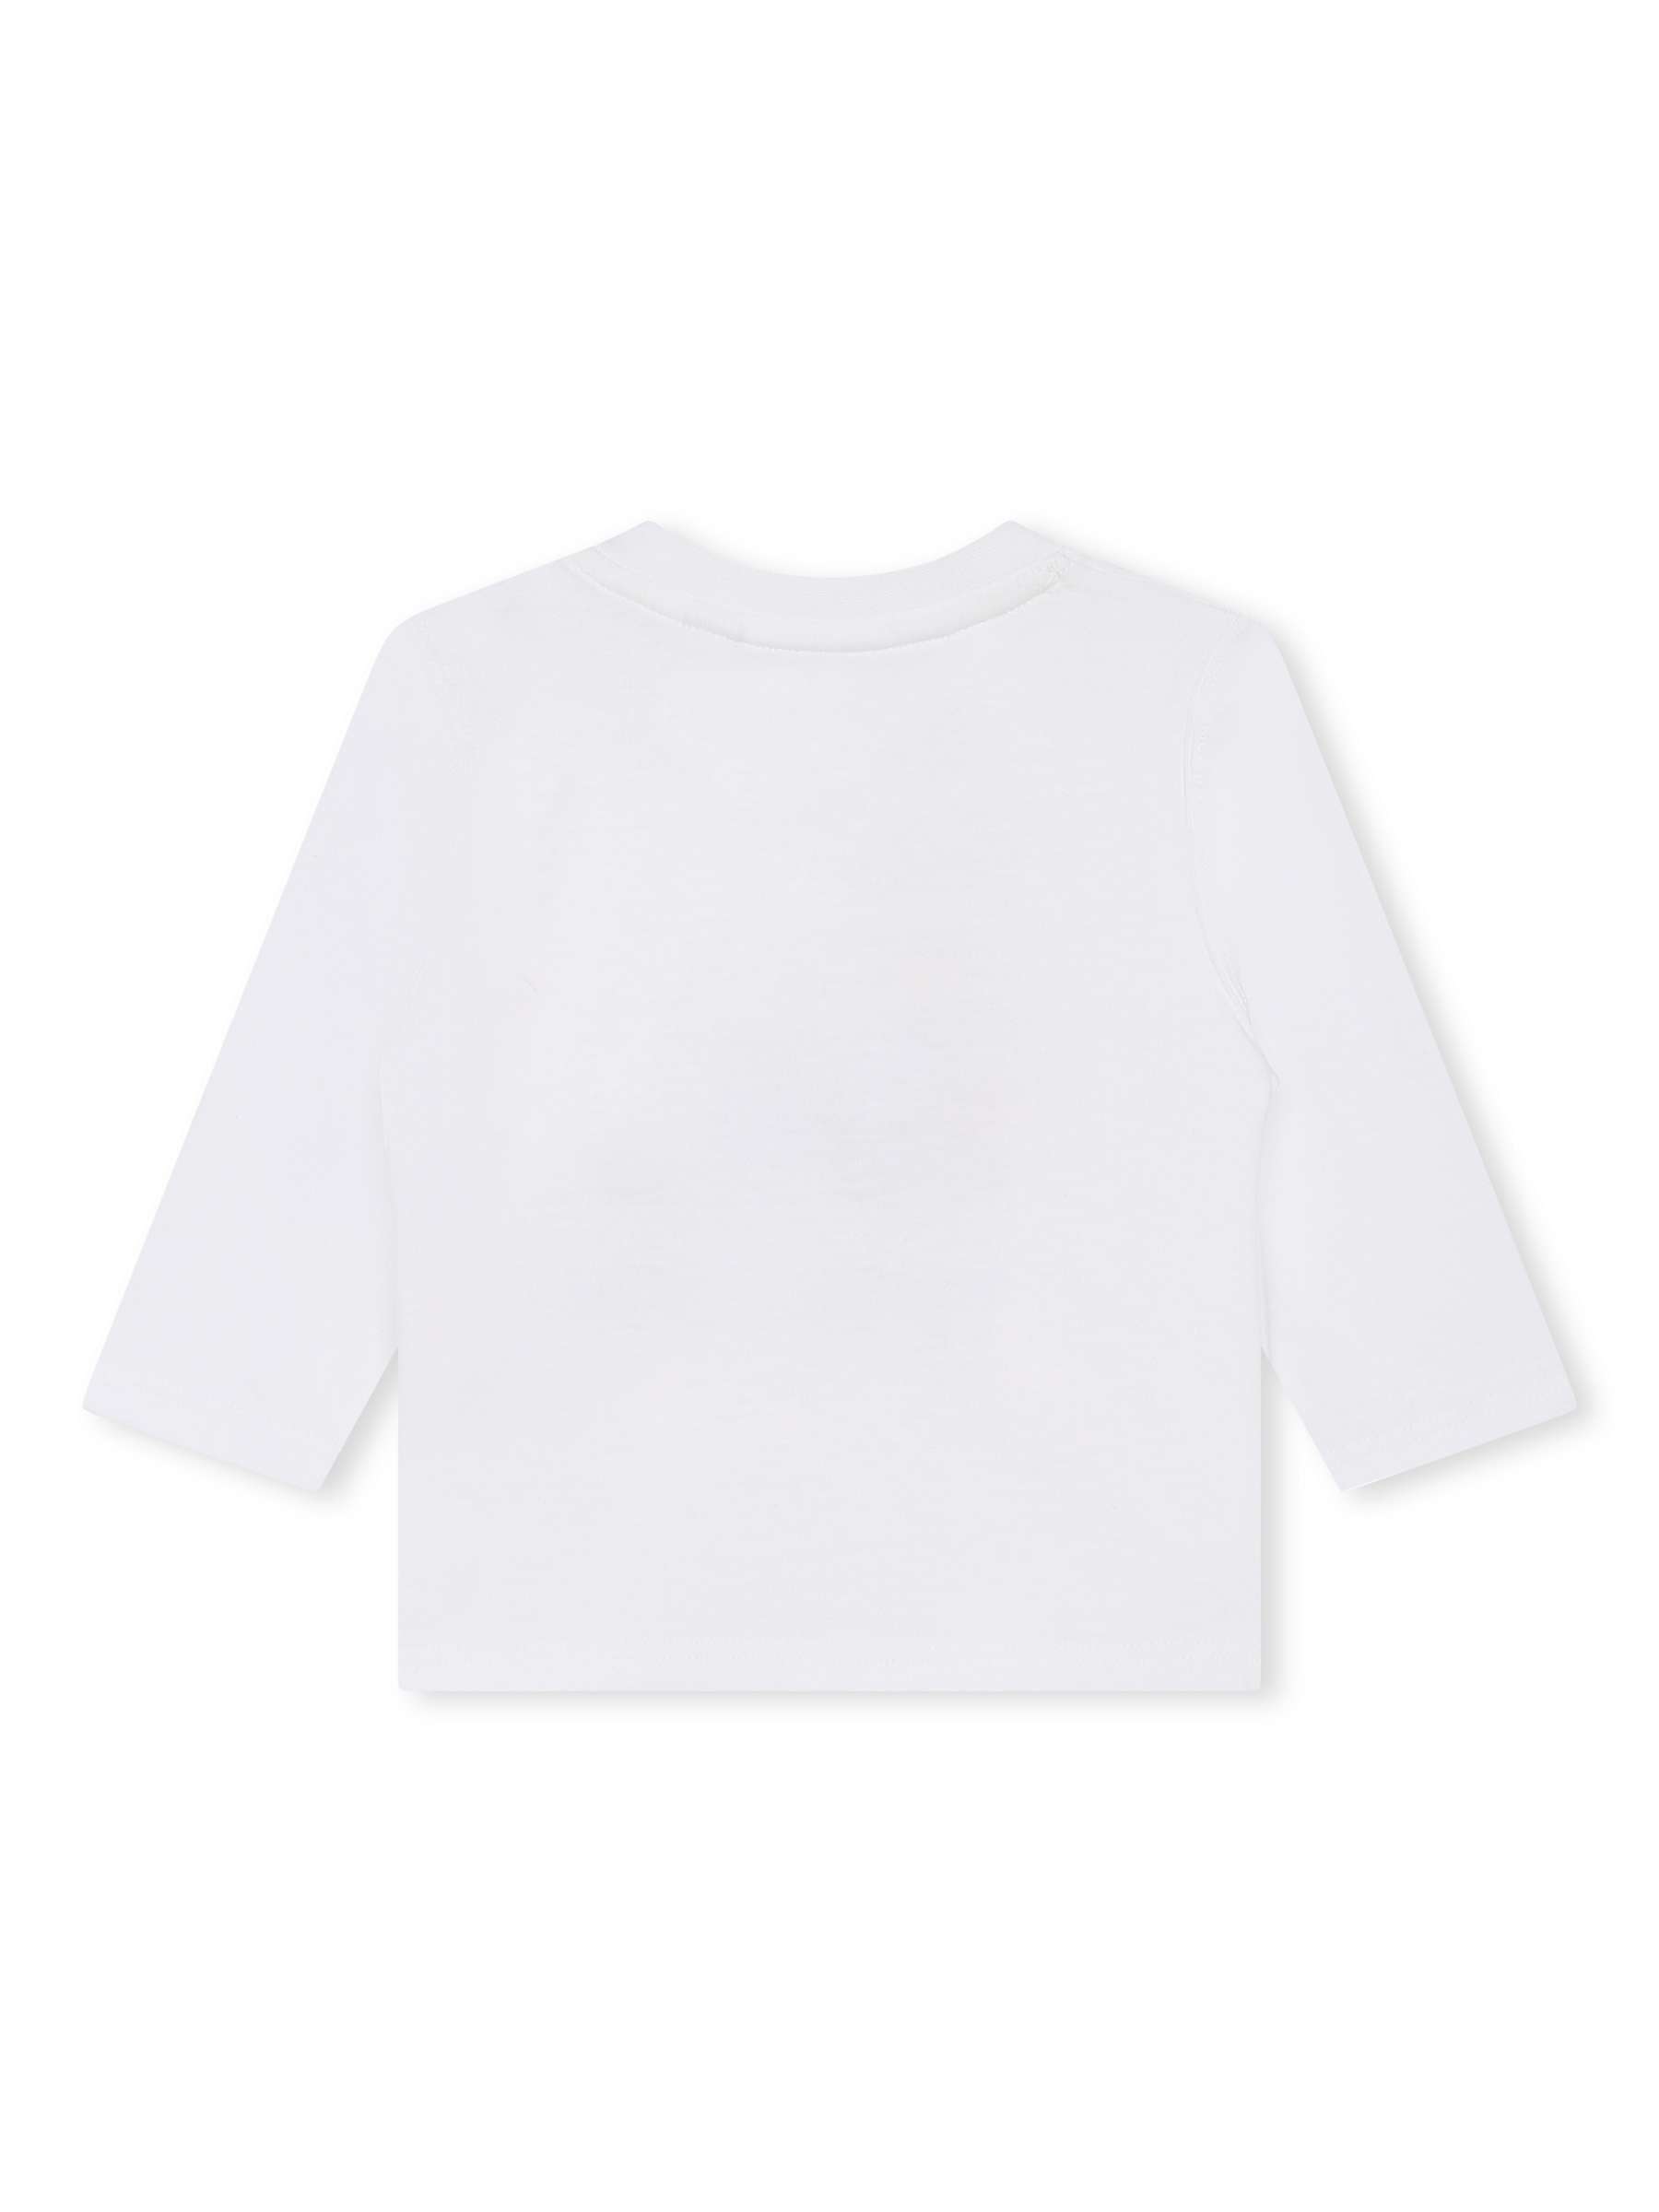 Buy Timberland Kids' Cotton Long Sleeve T-shirt, White Online at johnlewis.com